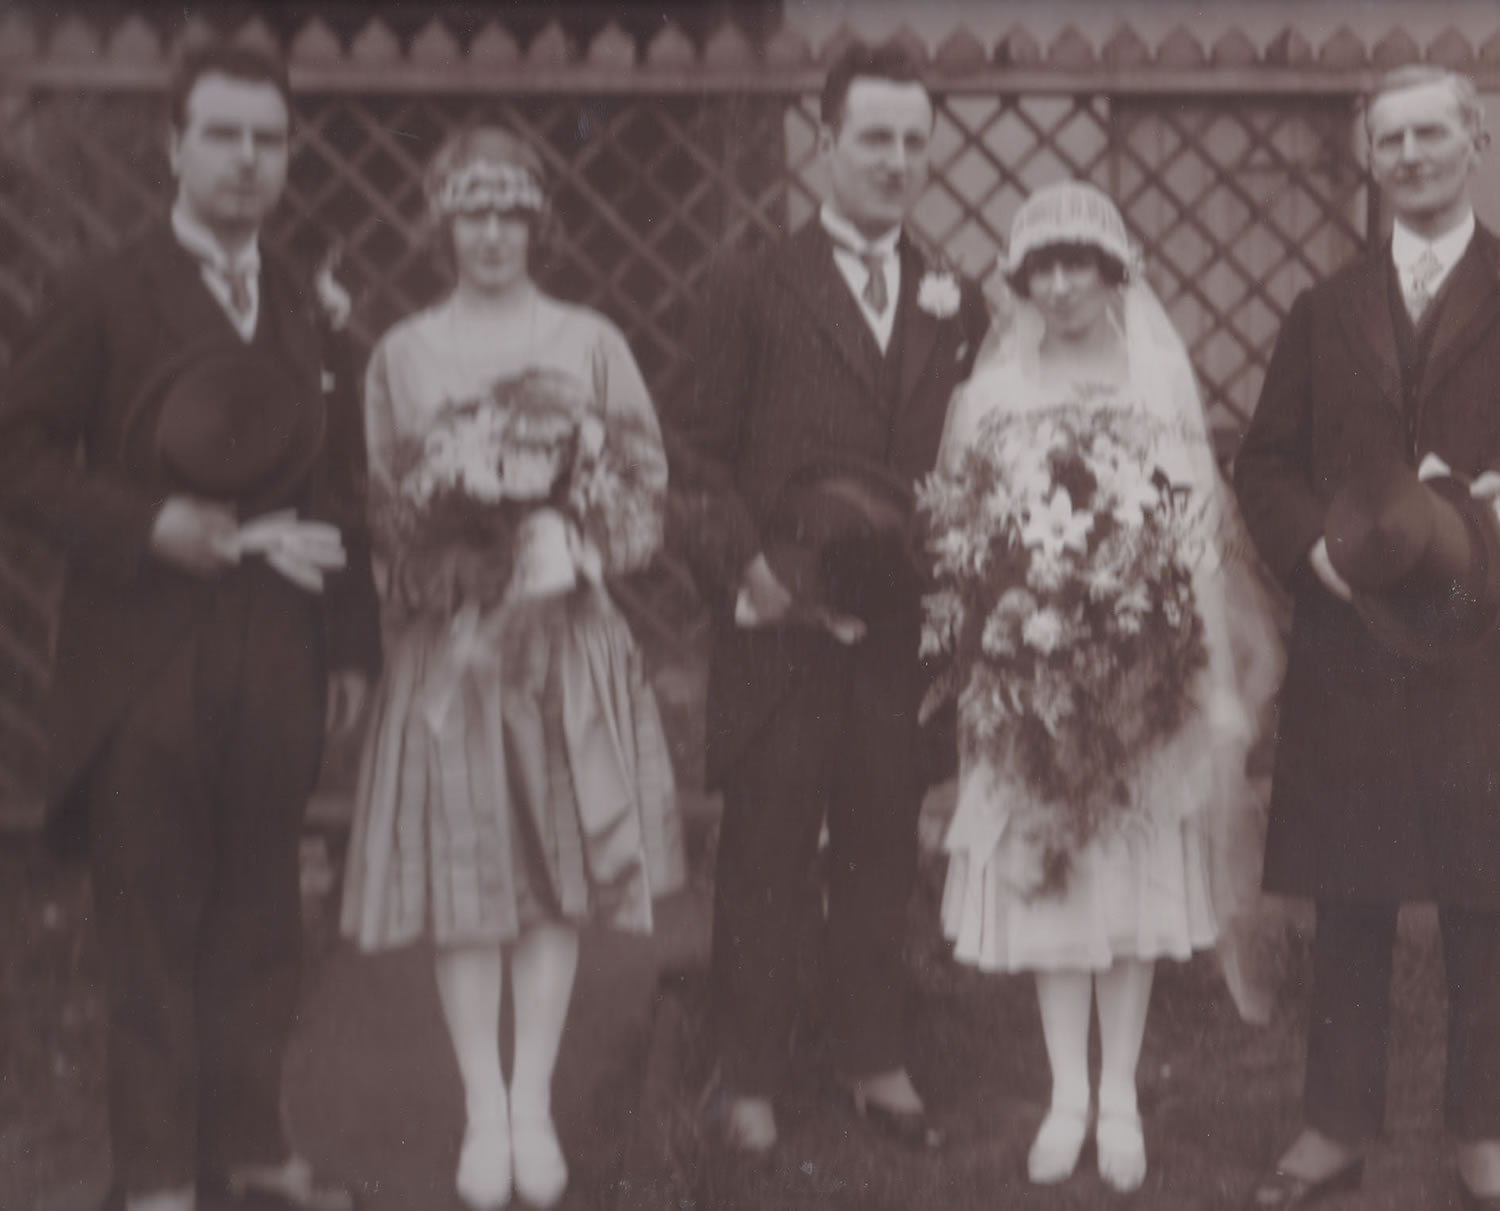 Henry Richard Jones (Ruth Jones' paternal grandfather) on wedding day to Margret Anita - 1927